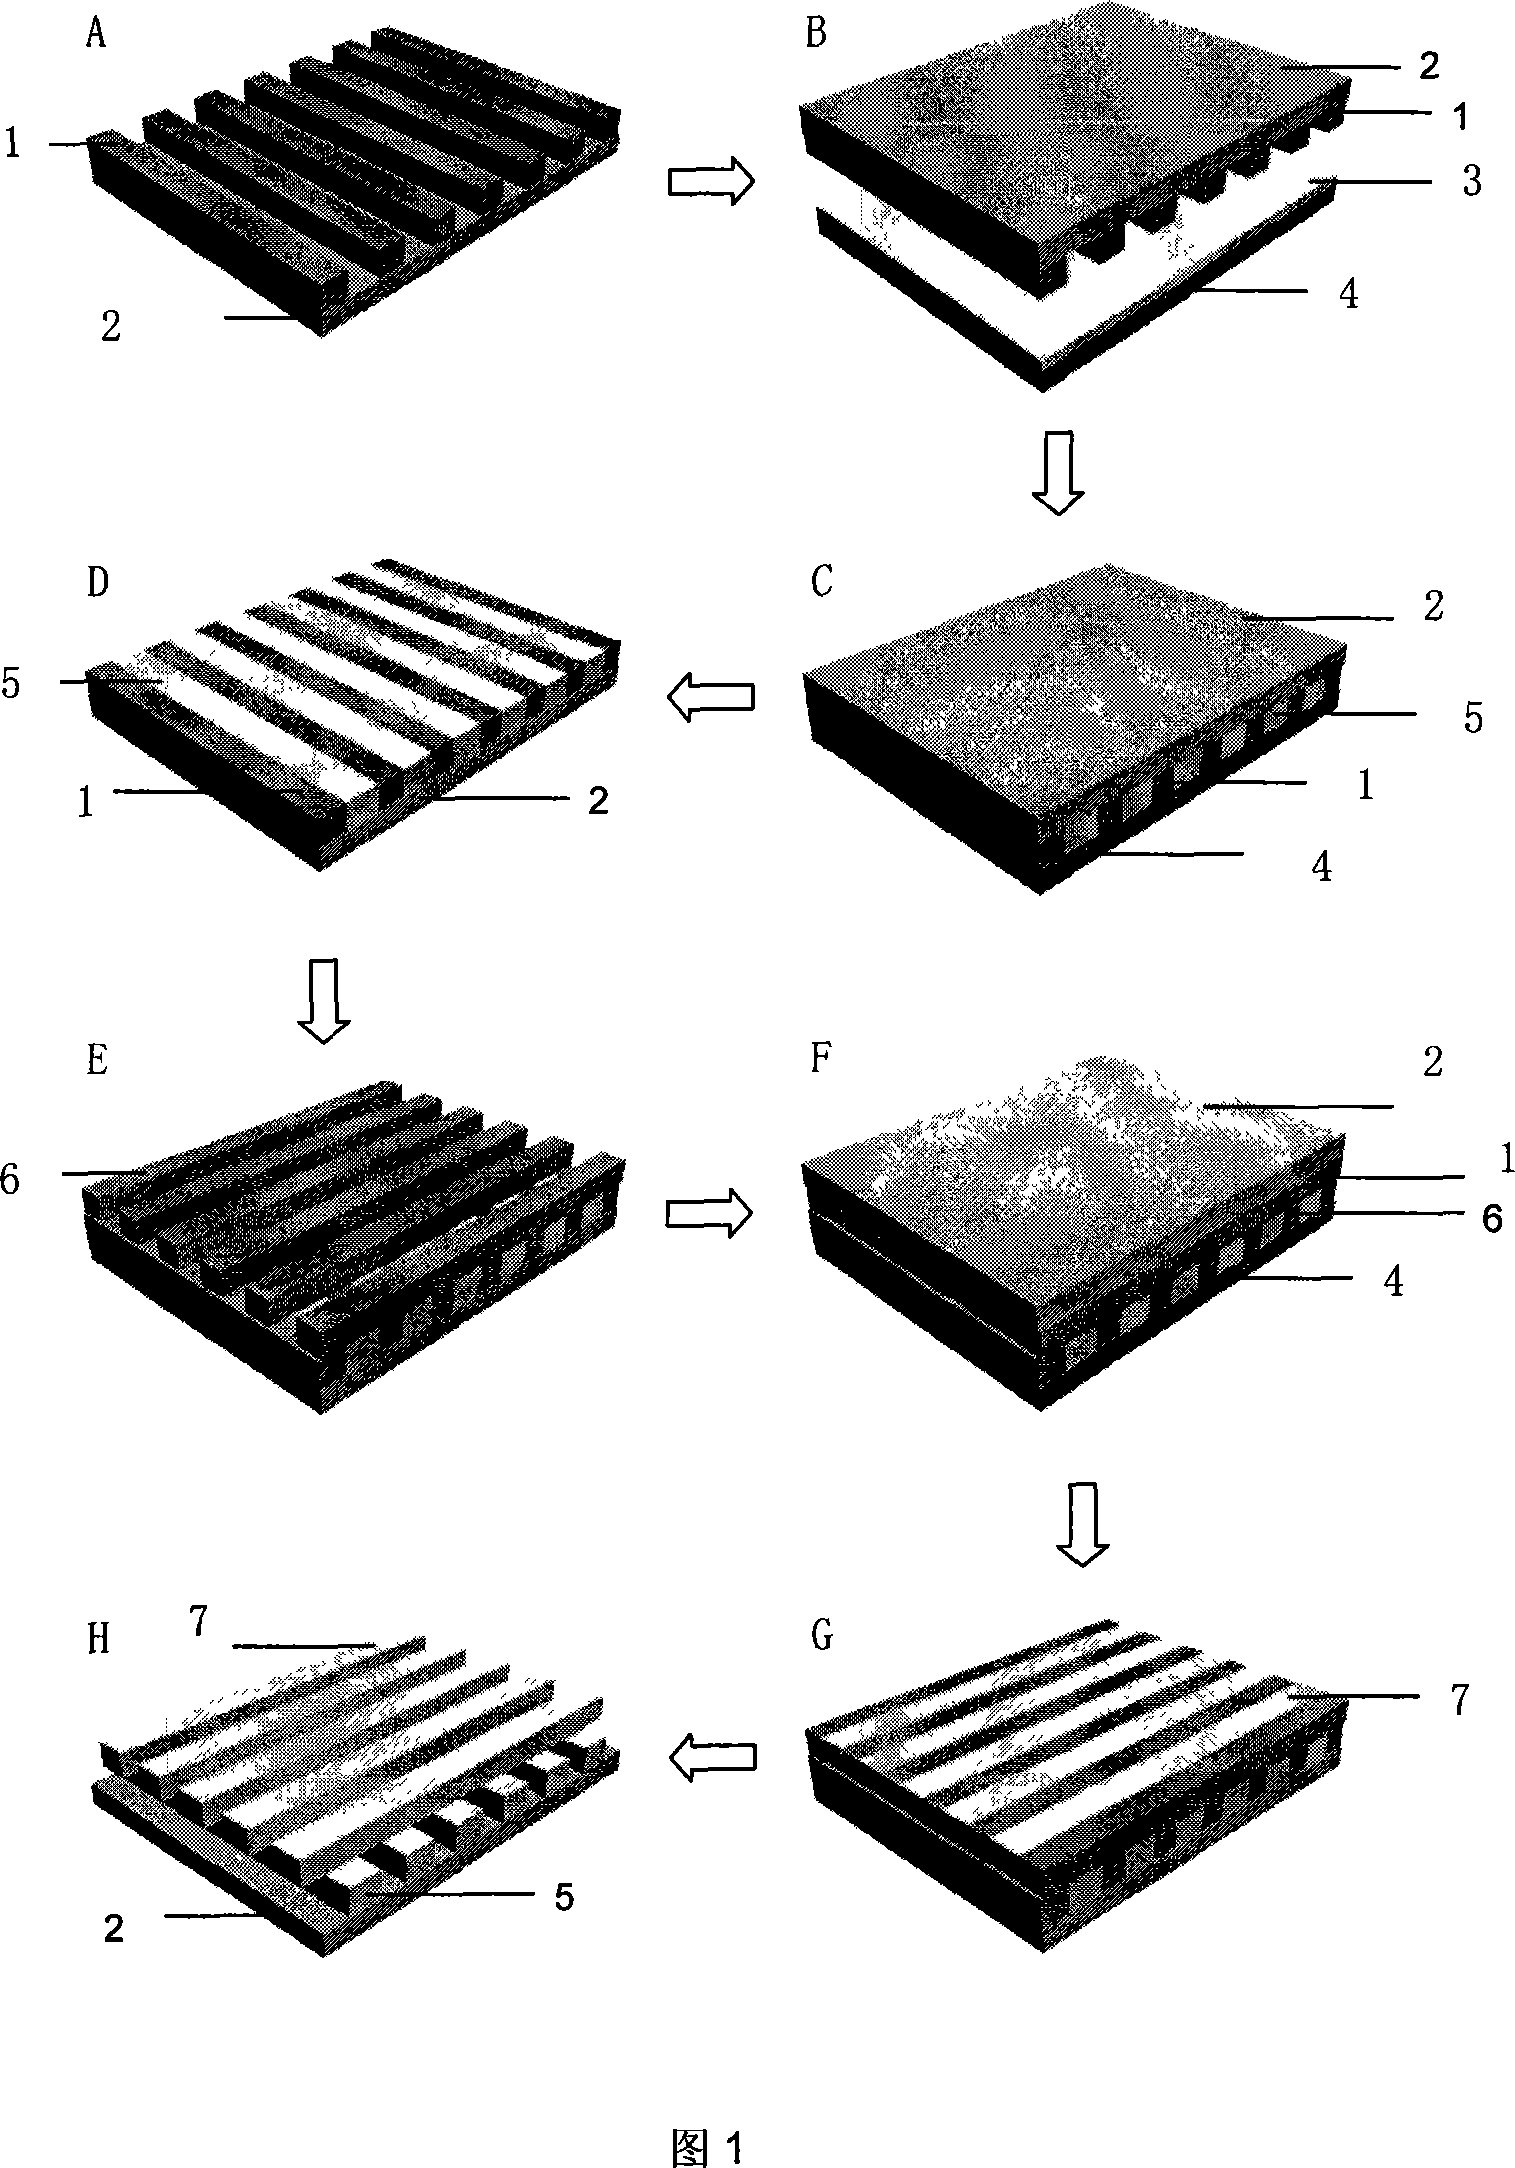 Method for constituting 3-D structure